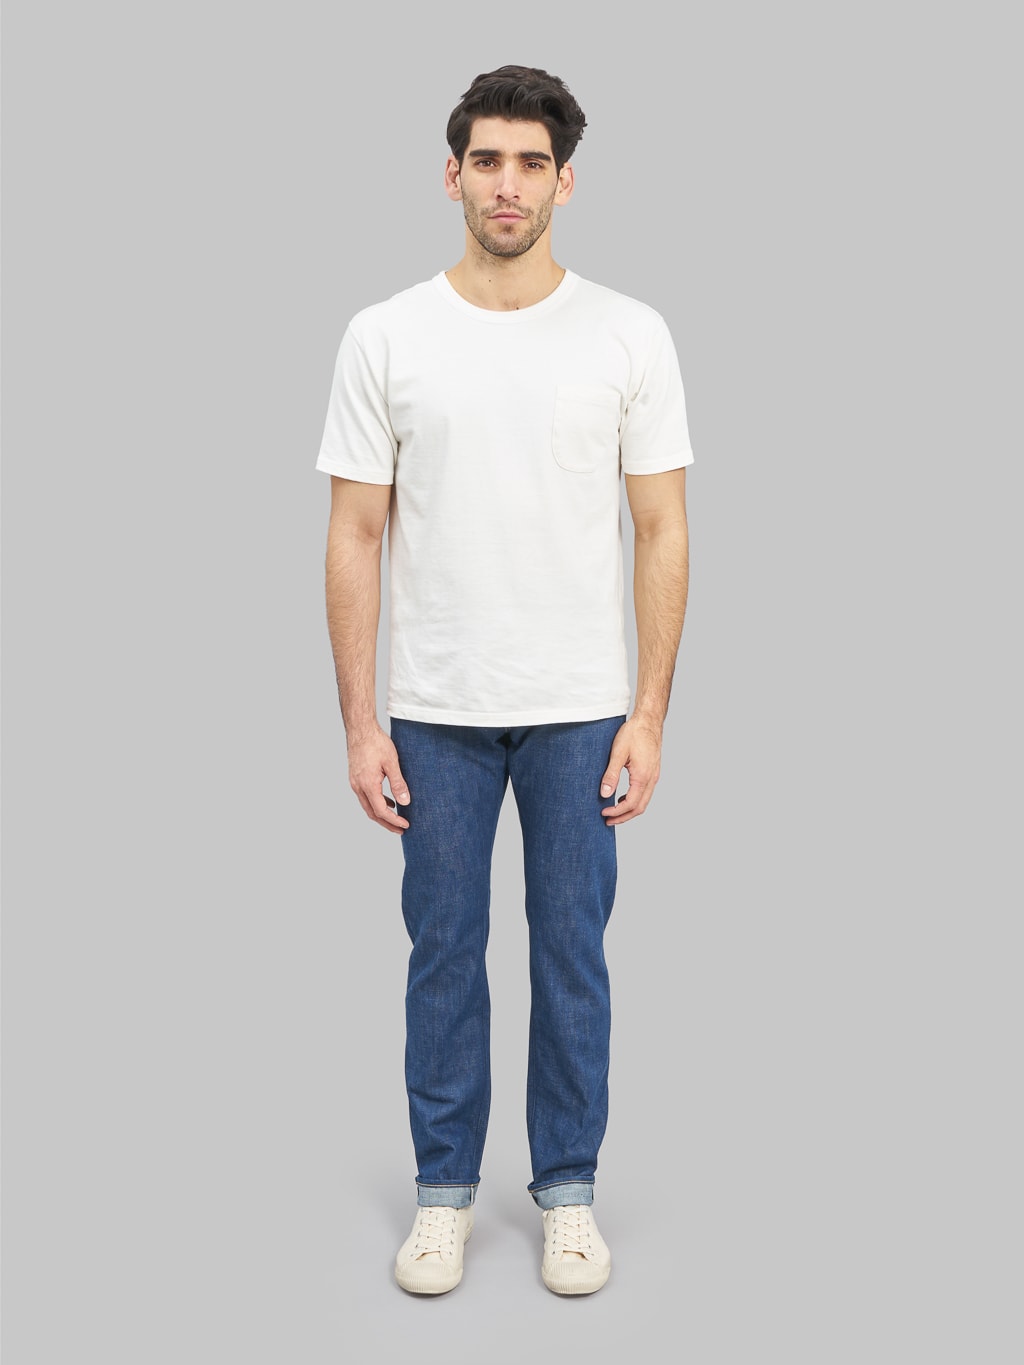 momotaro 0605 ai natural indigo dyed natural tapered denim jeans model front fit